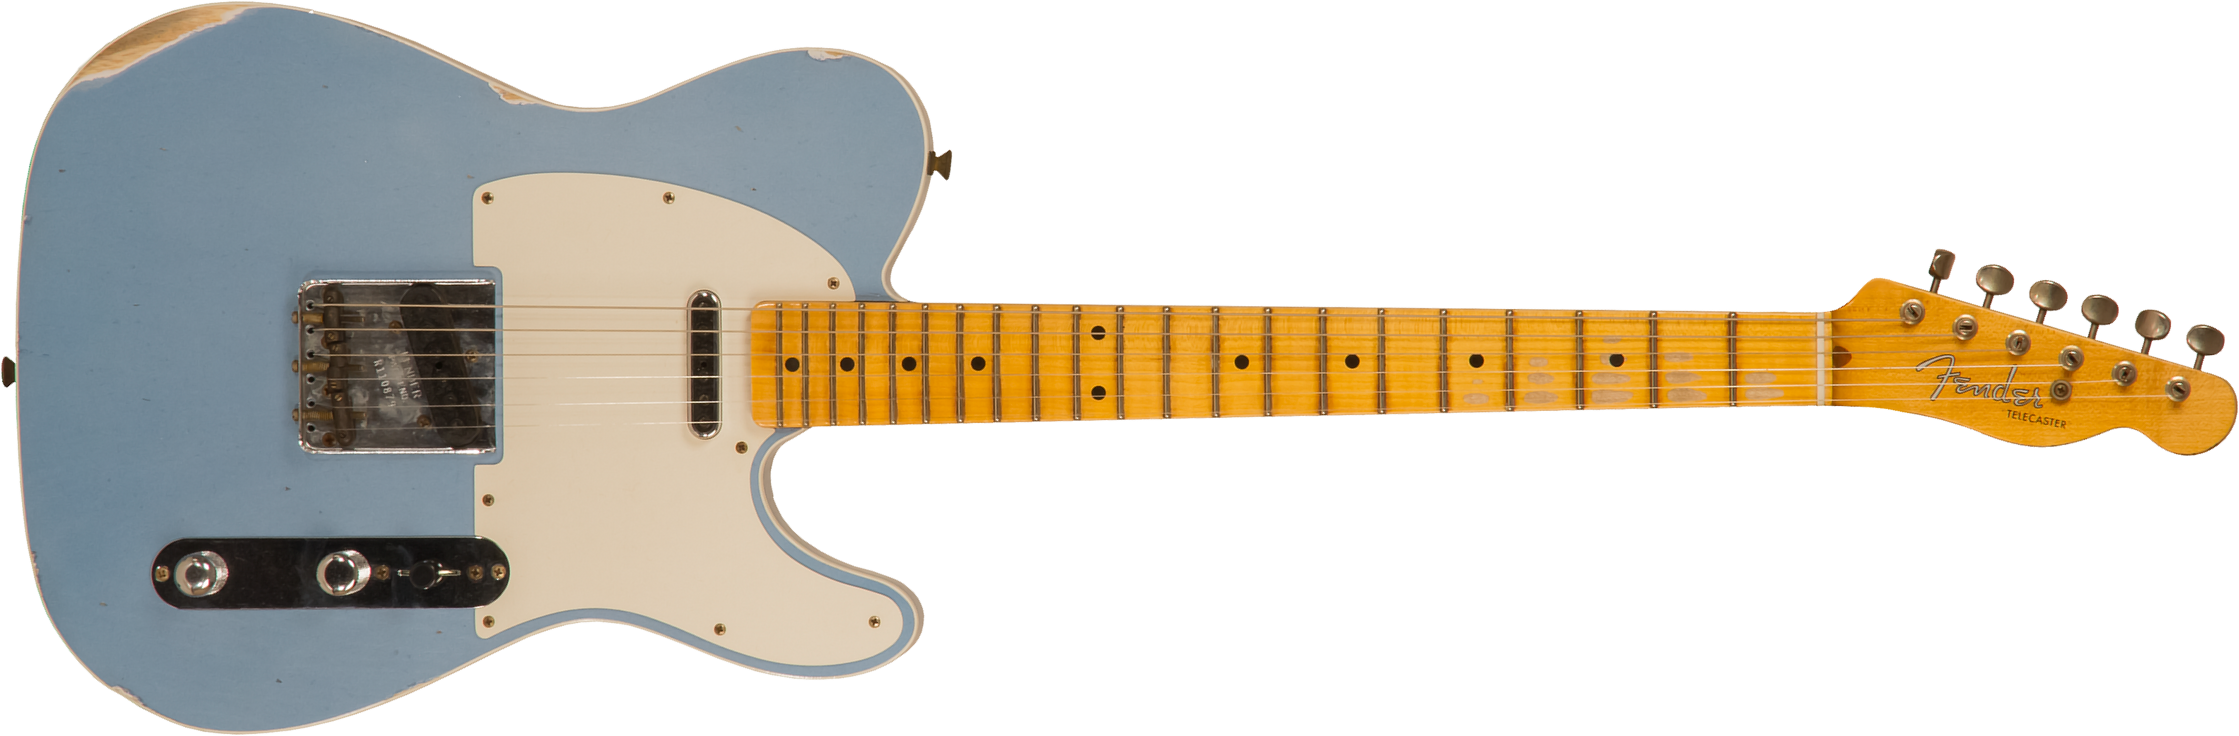 Fender Custom Shop Tele Custom Tomatillo 2s Ht Mn #r110879 - Relic Lake Placid Blue - Tel shape electric guitar - Main picture